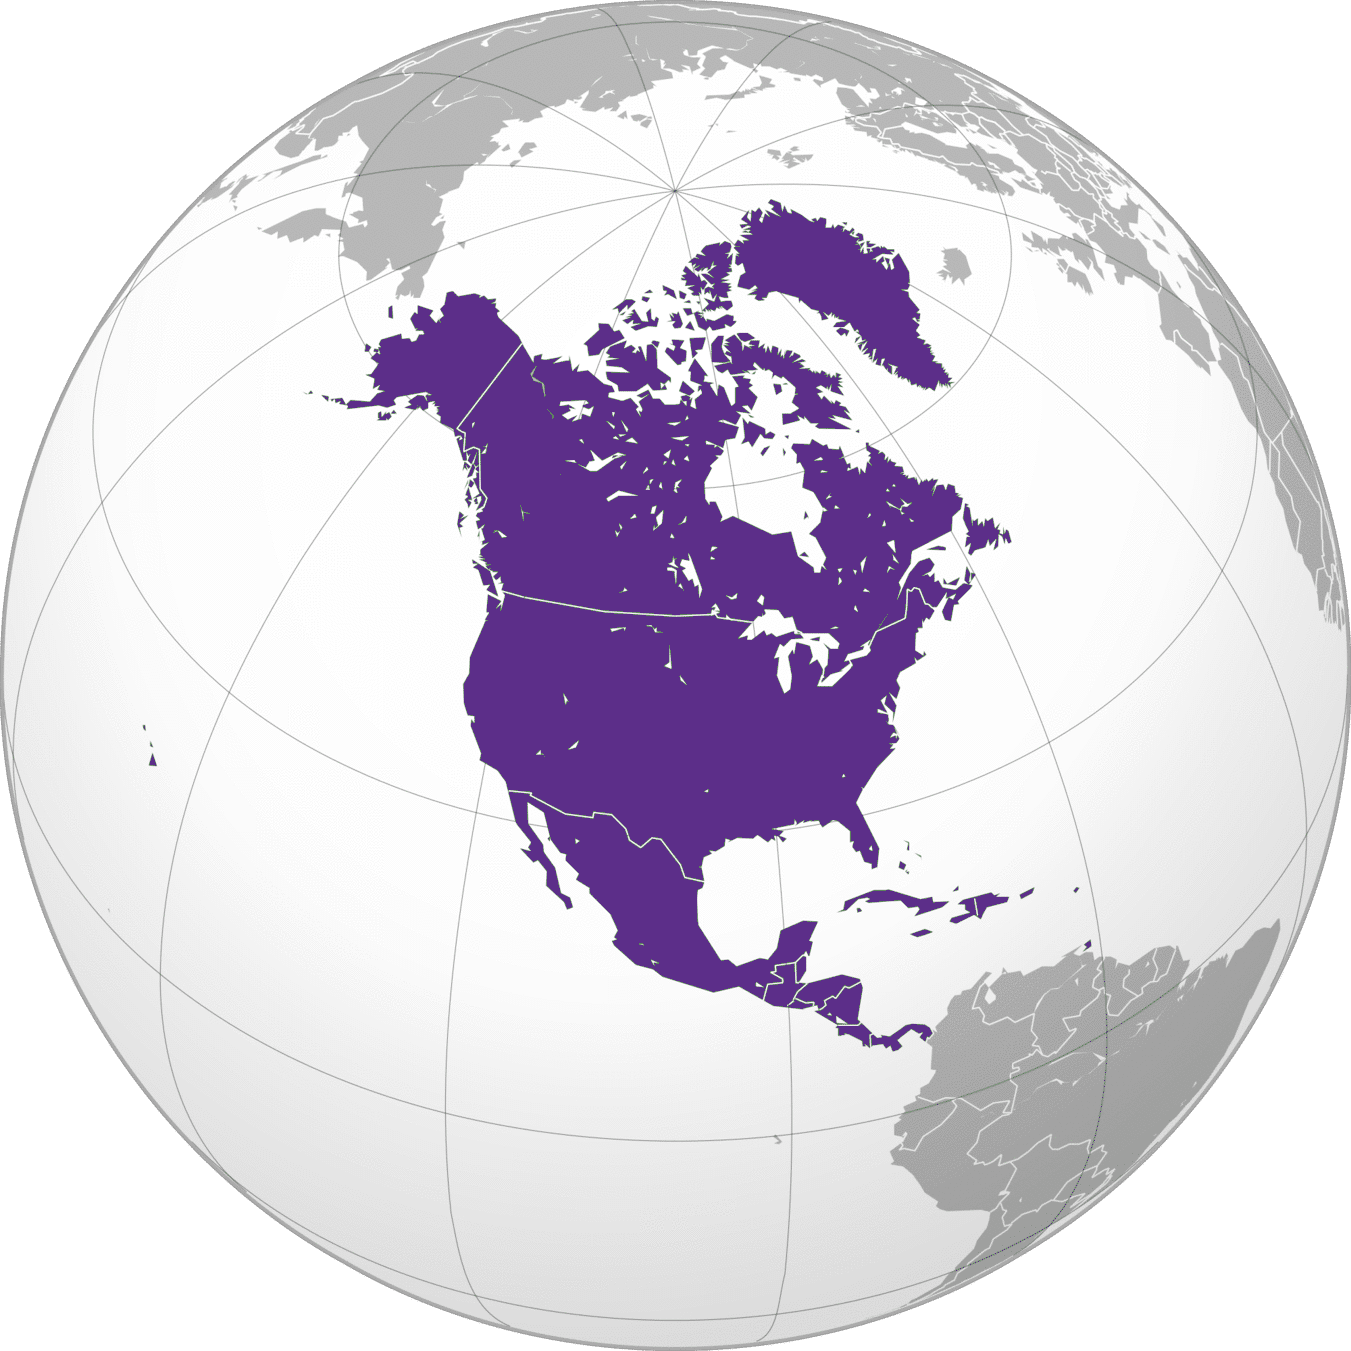 International Moving to North America